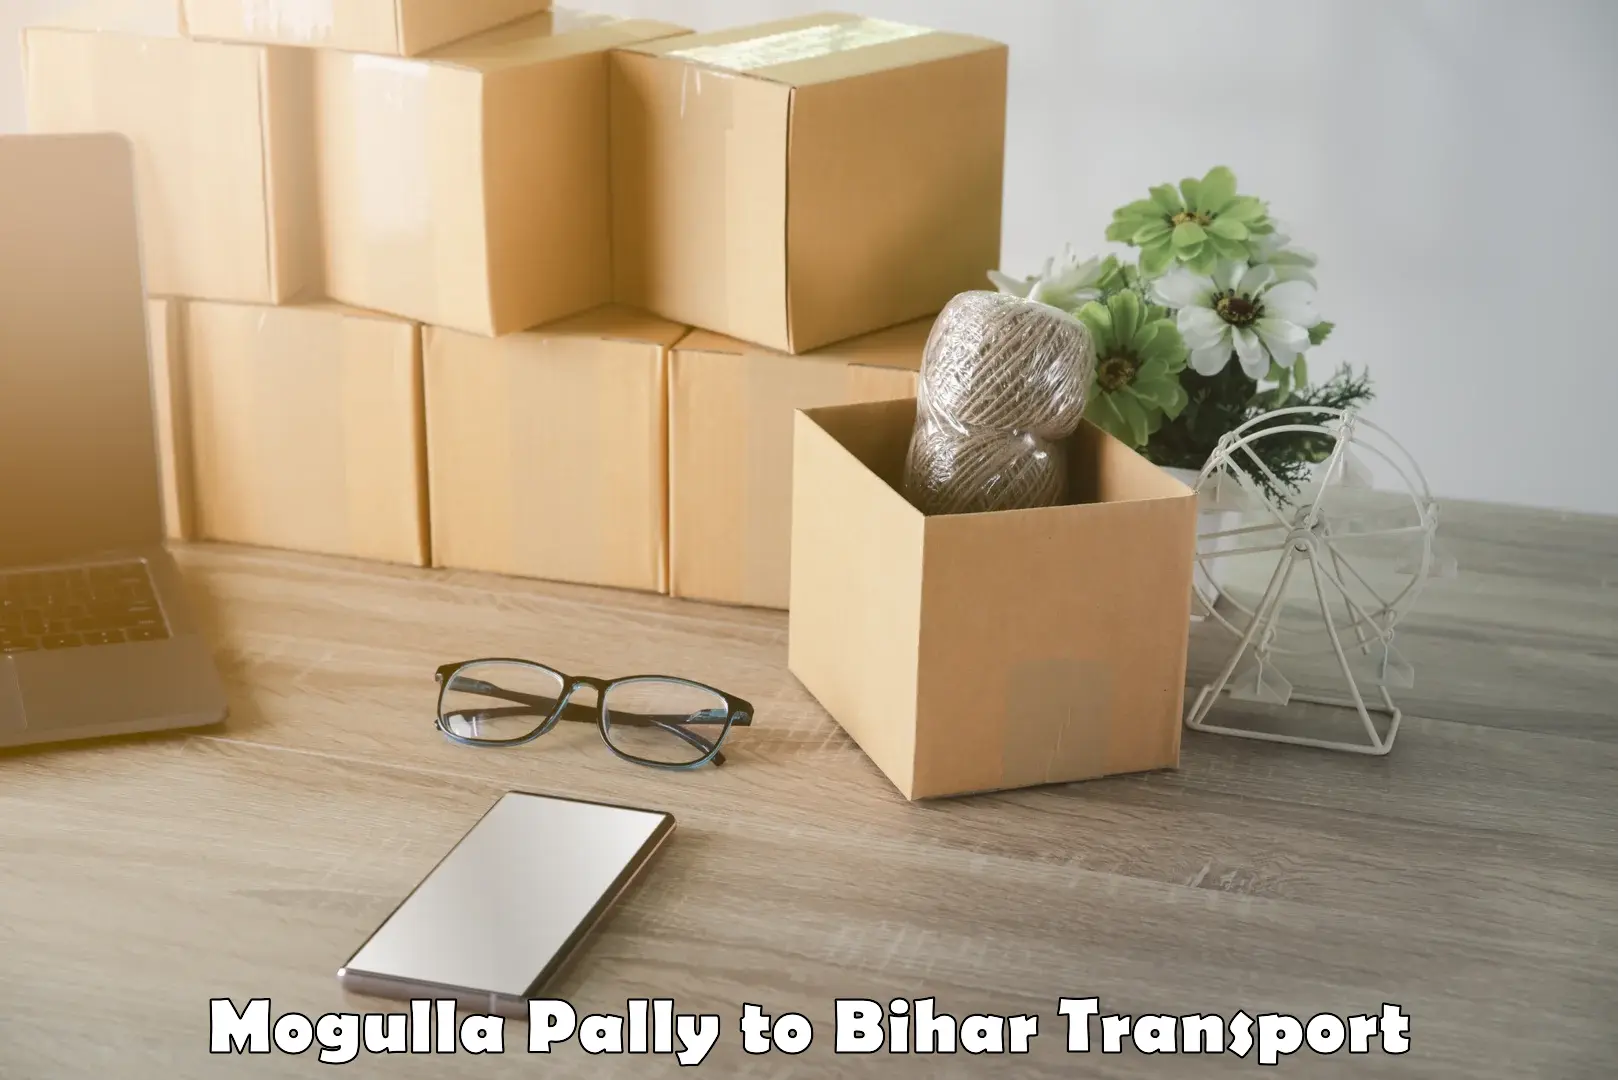 Bike transport service Mogulla Pally to Bihar